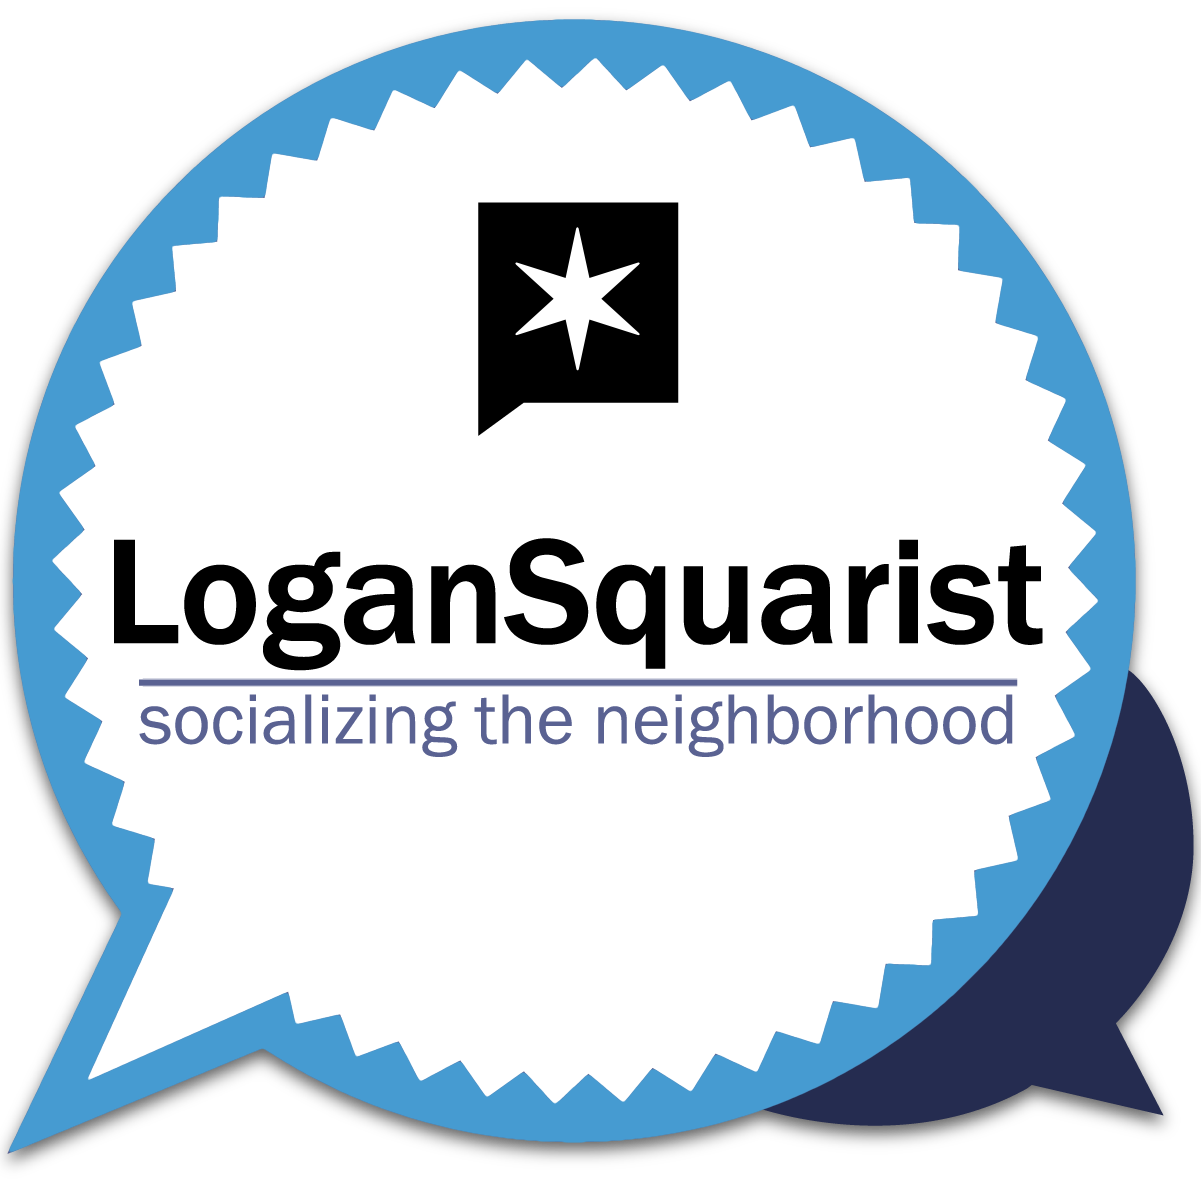 LoganSquarist LLC